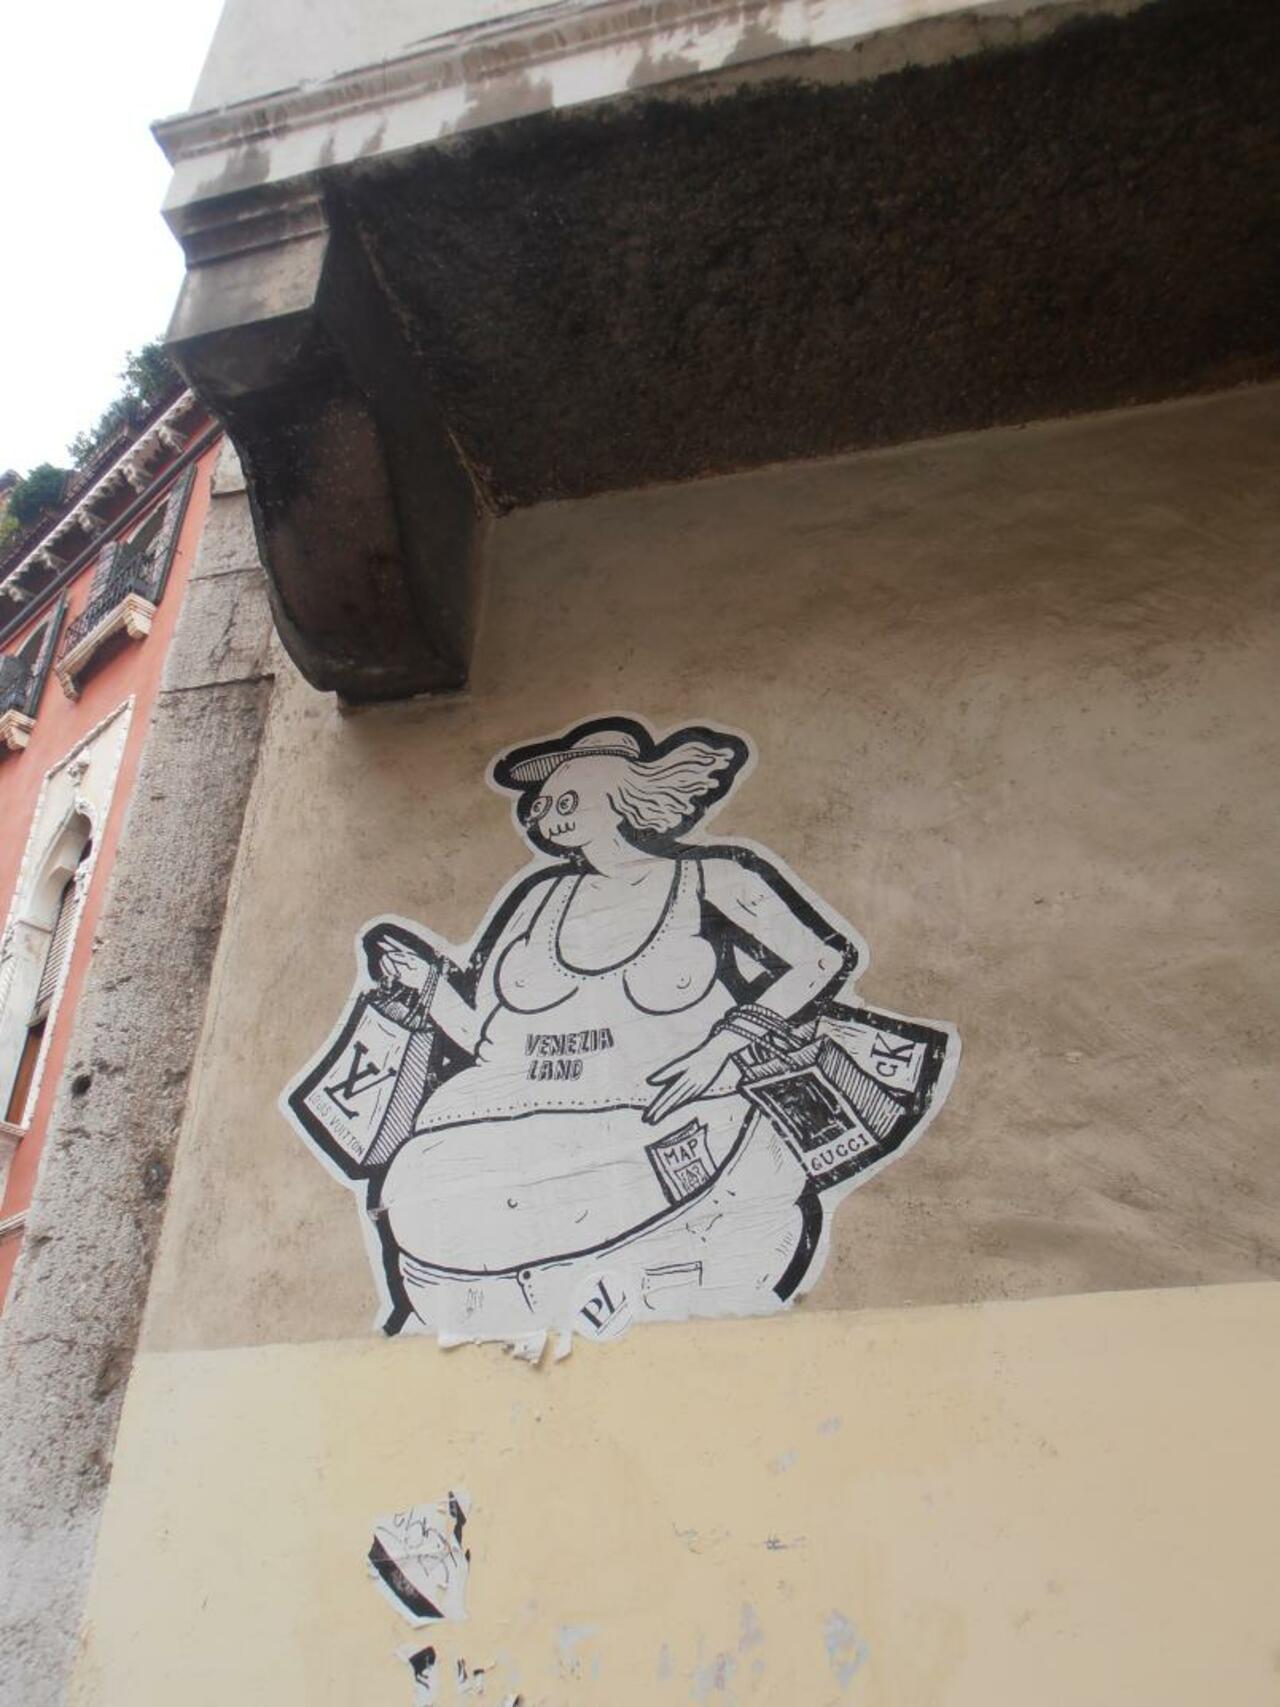 RT @AliciaDCrumpton: #graffiti #streetart #veniceitaly https://t.co/RbRxYrWZuK